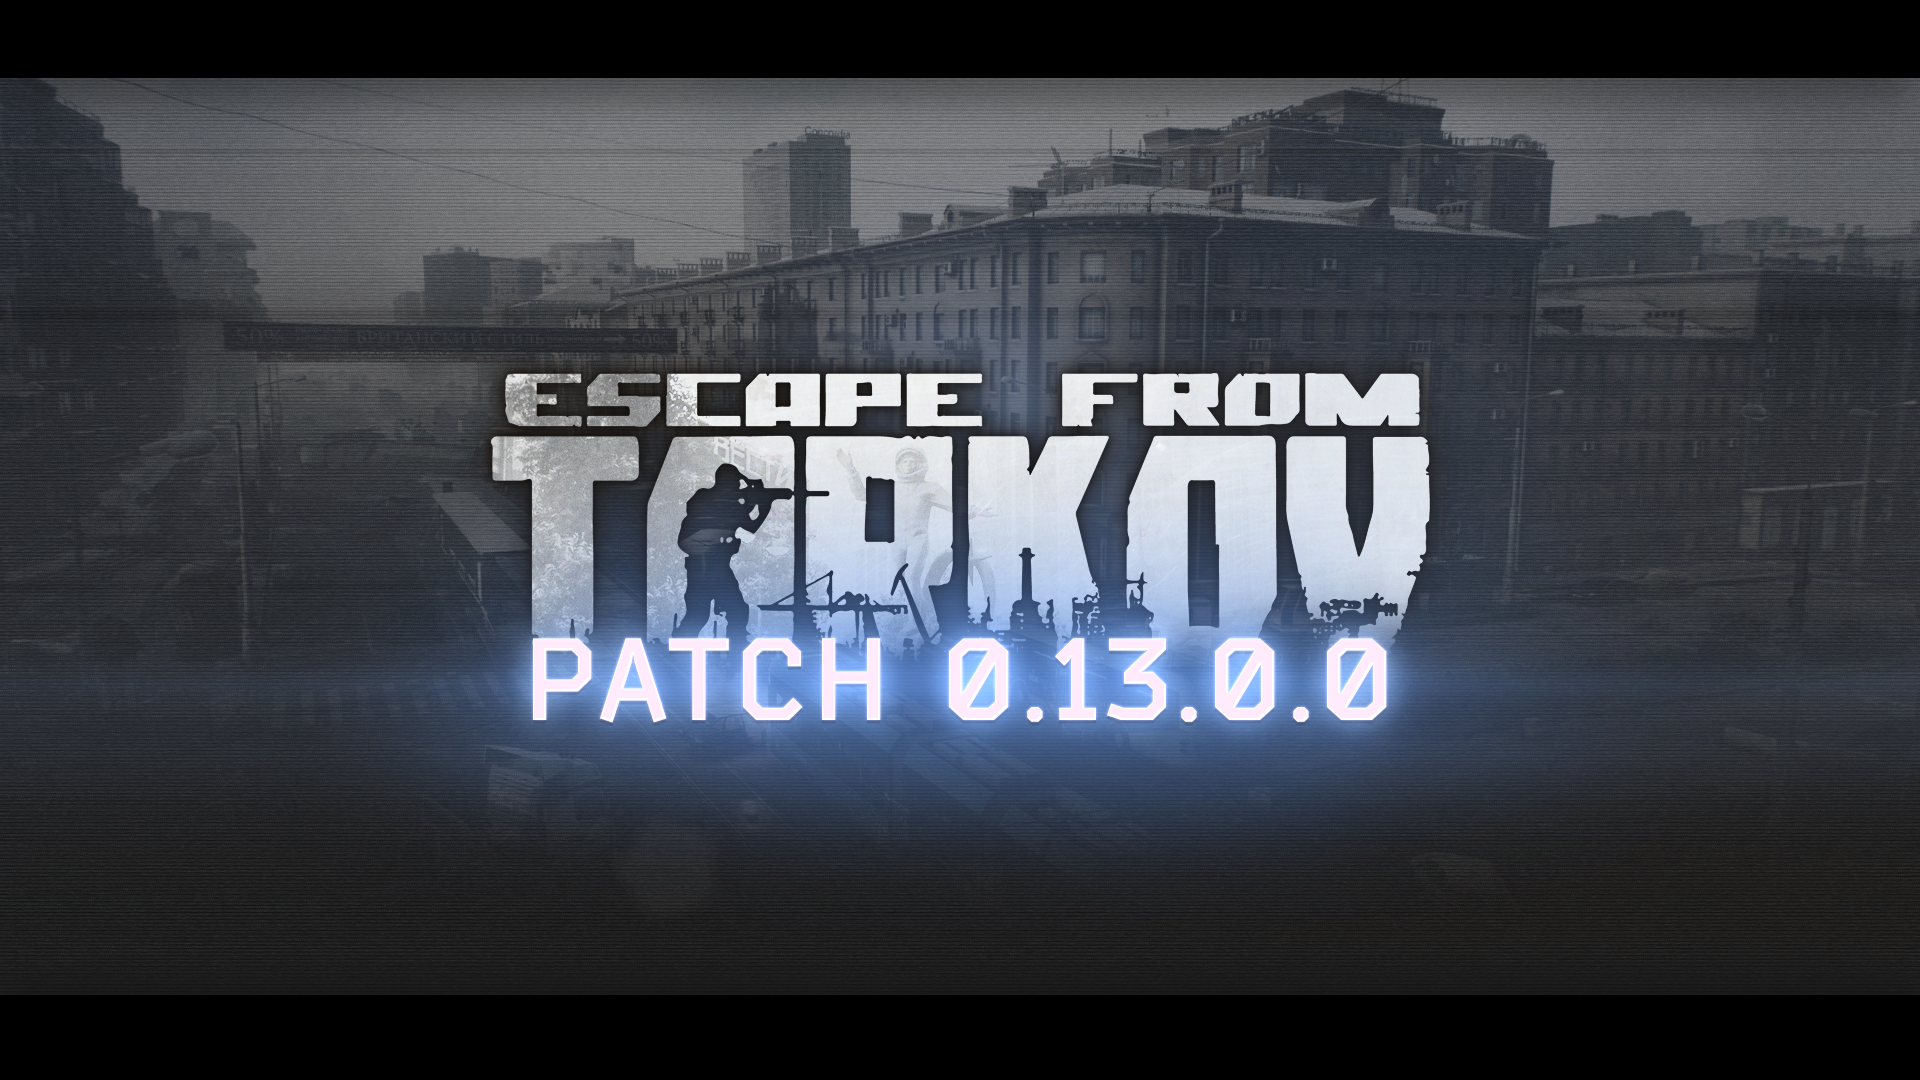 Escape from tarkov patch 13